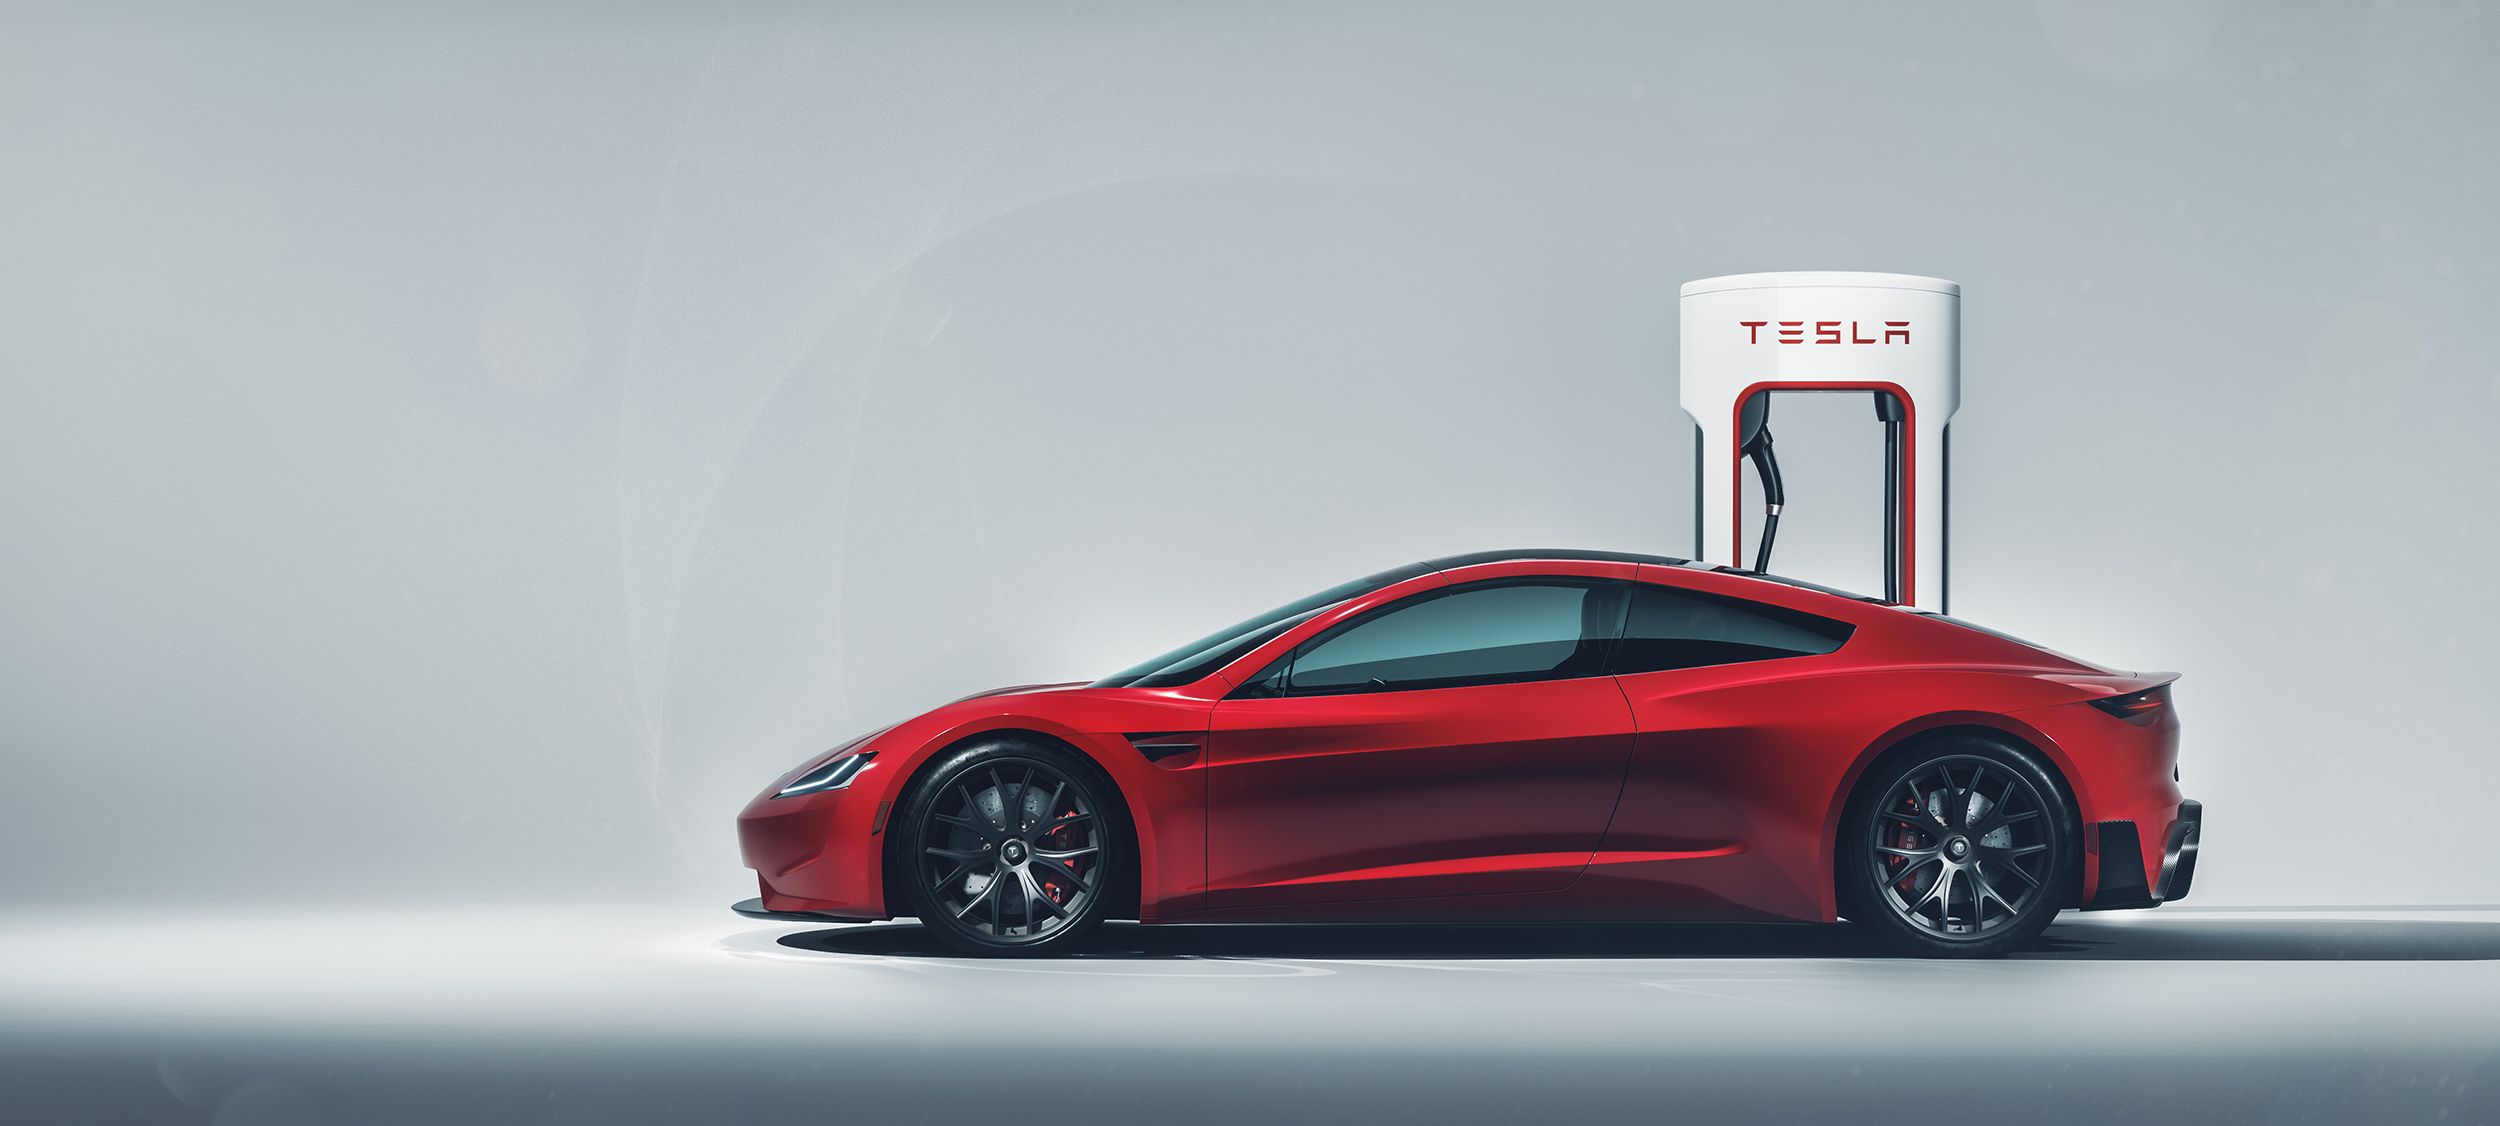 Tesla Roadster Charging, HD Cars, 4k Wallpaper, Image